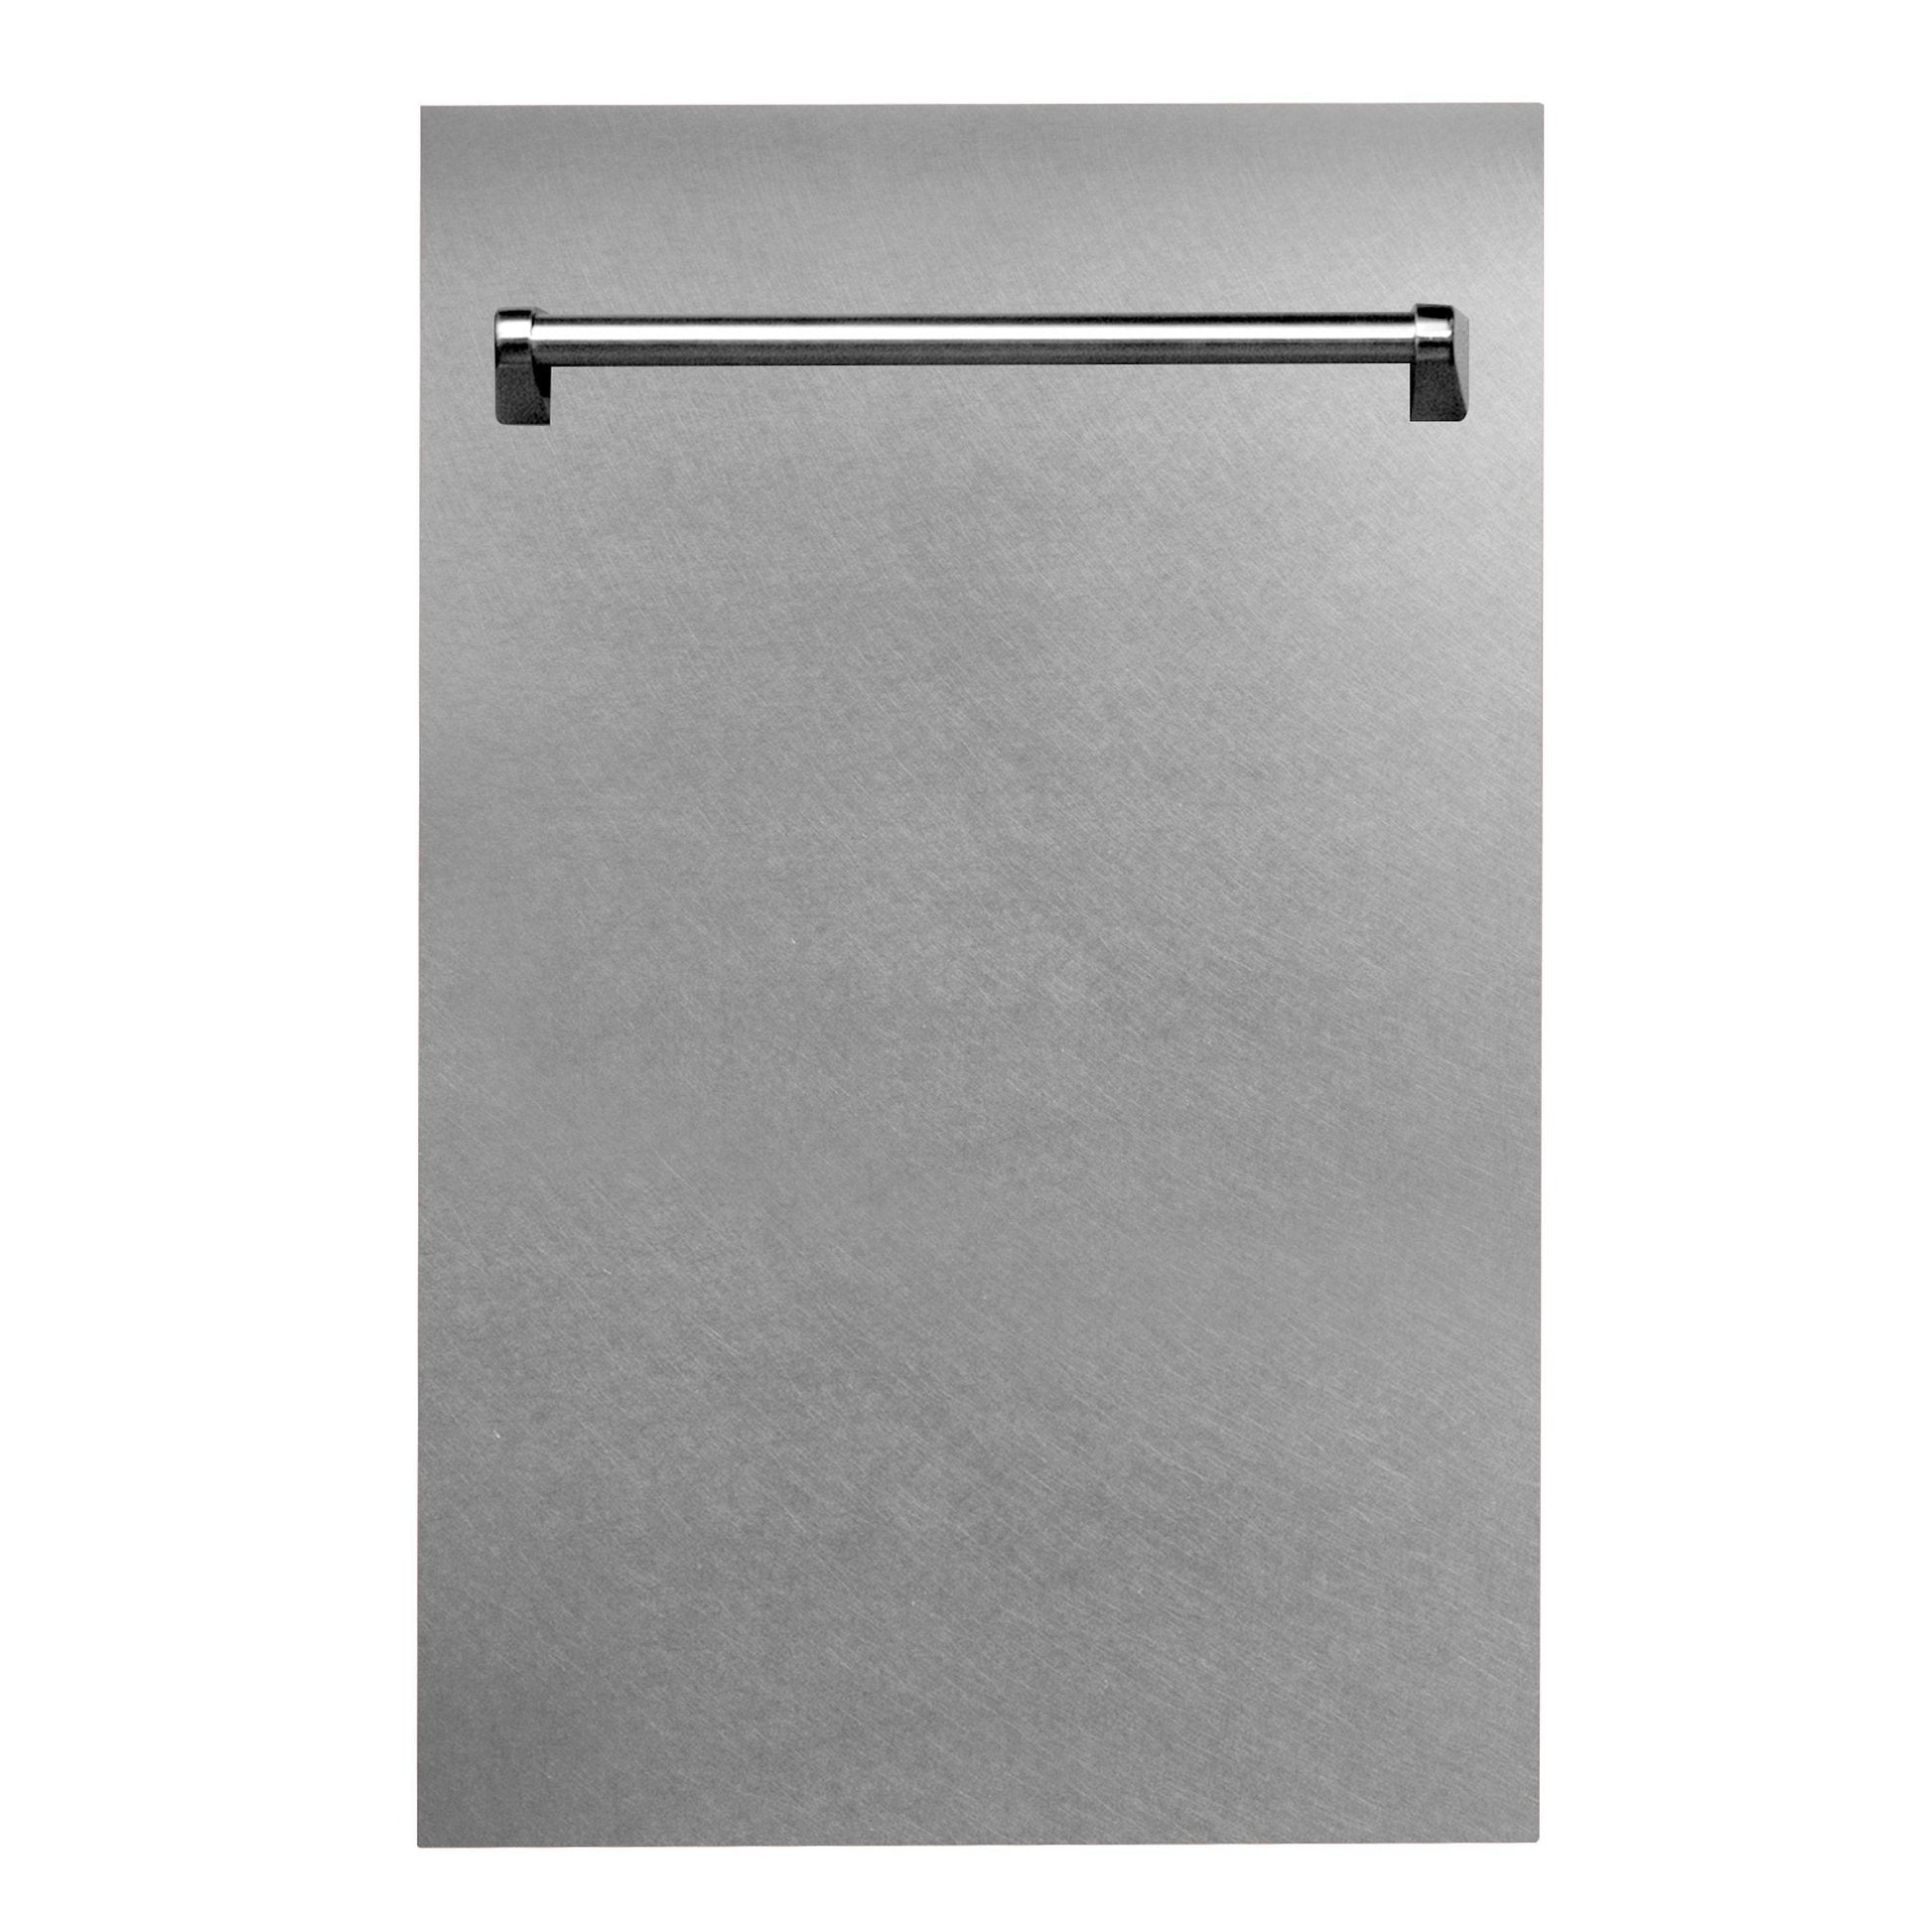 ZLINE 18" Dishwasher Panel - Traditional Handle